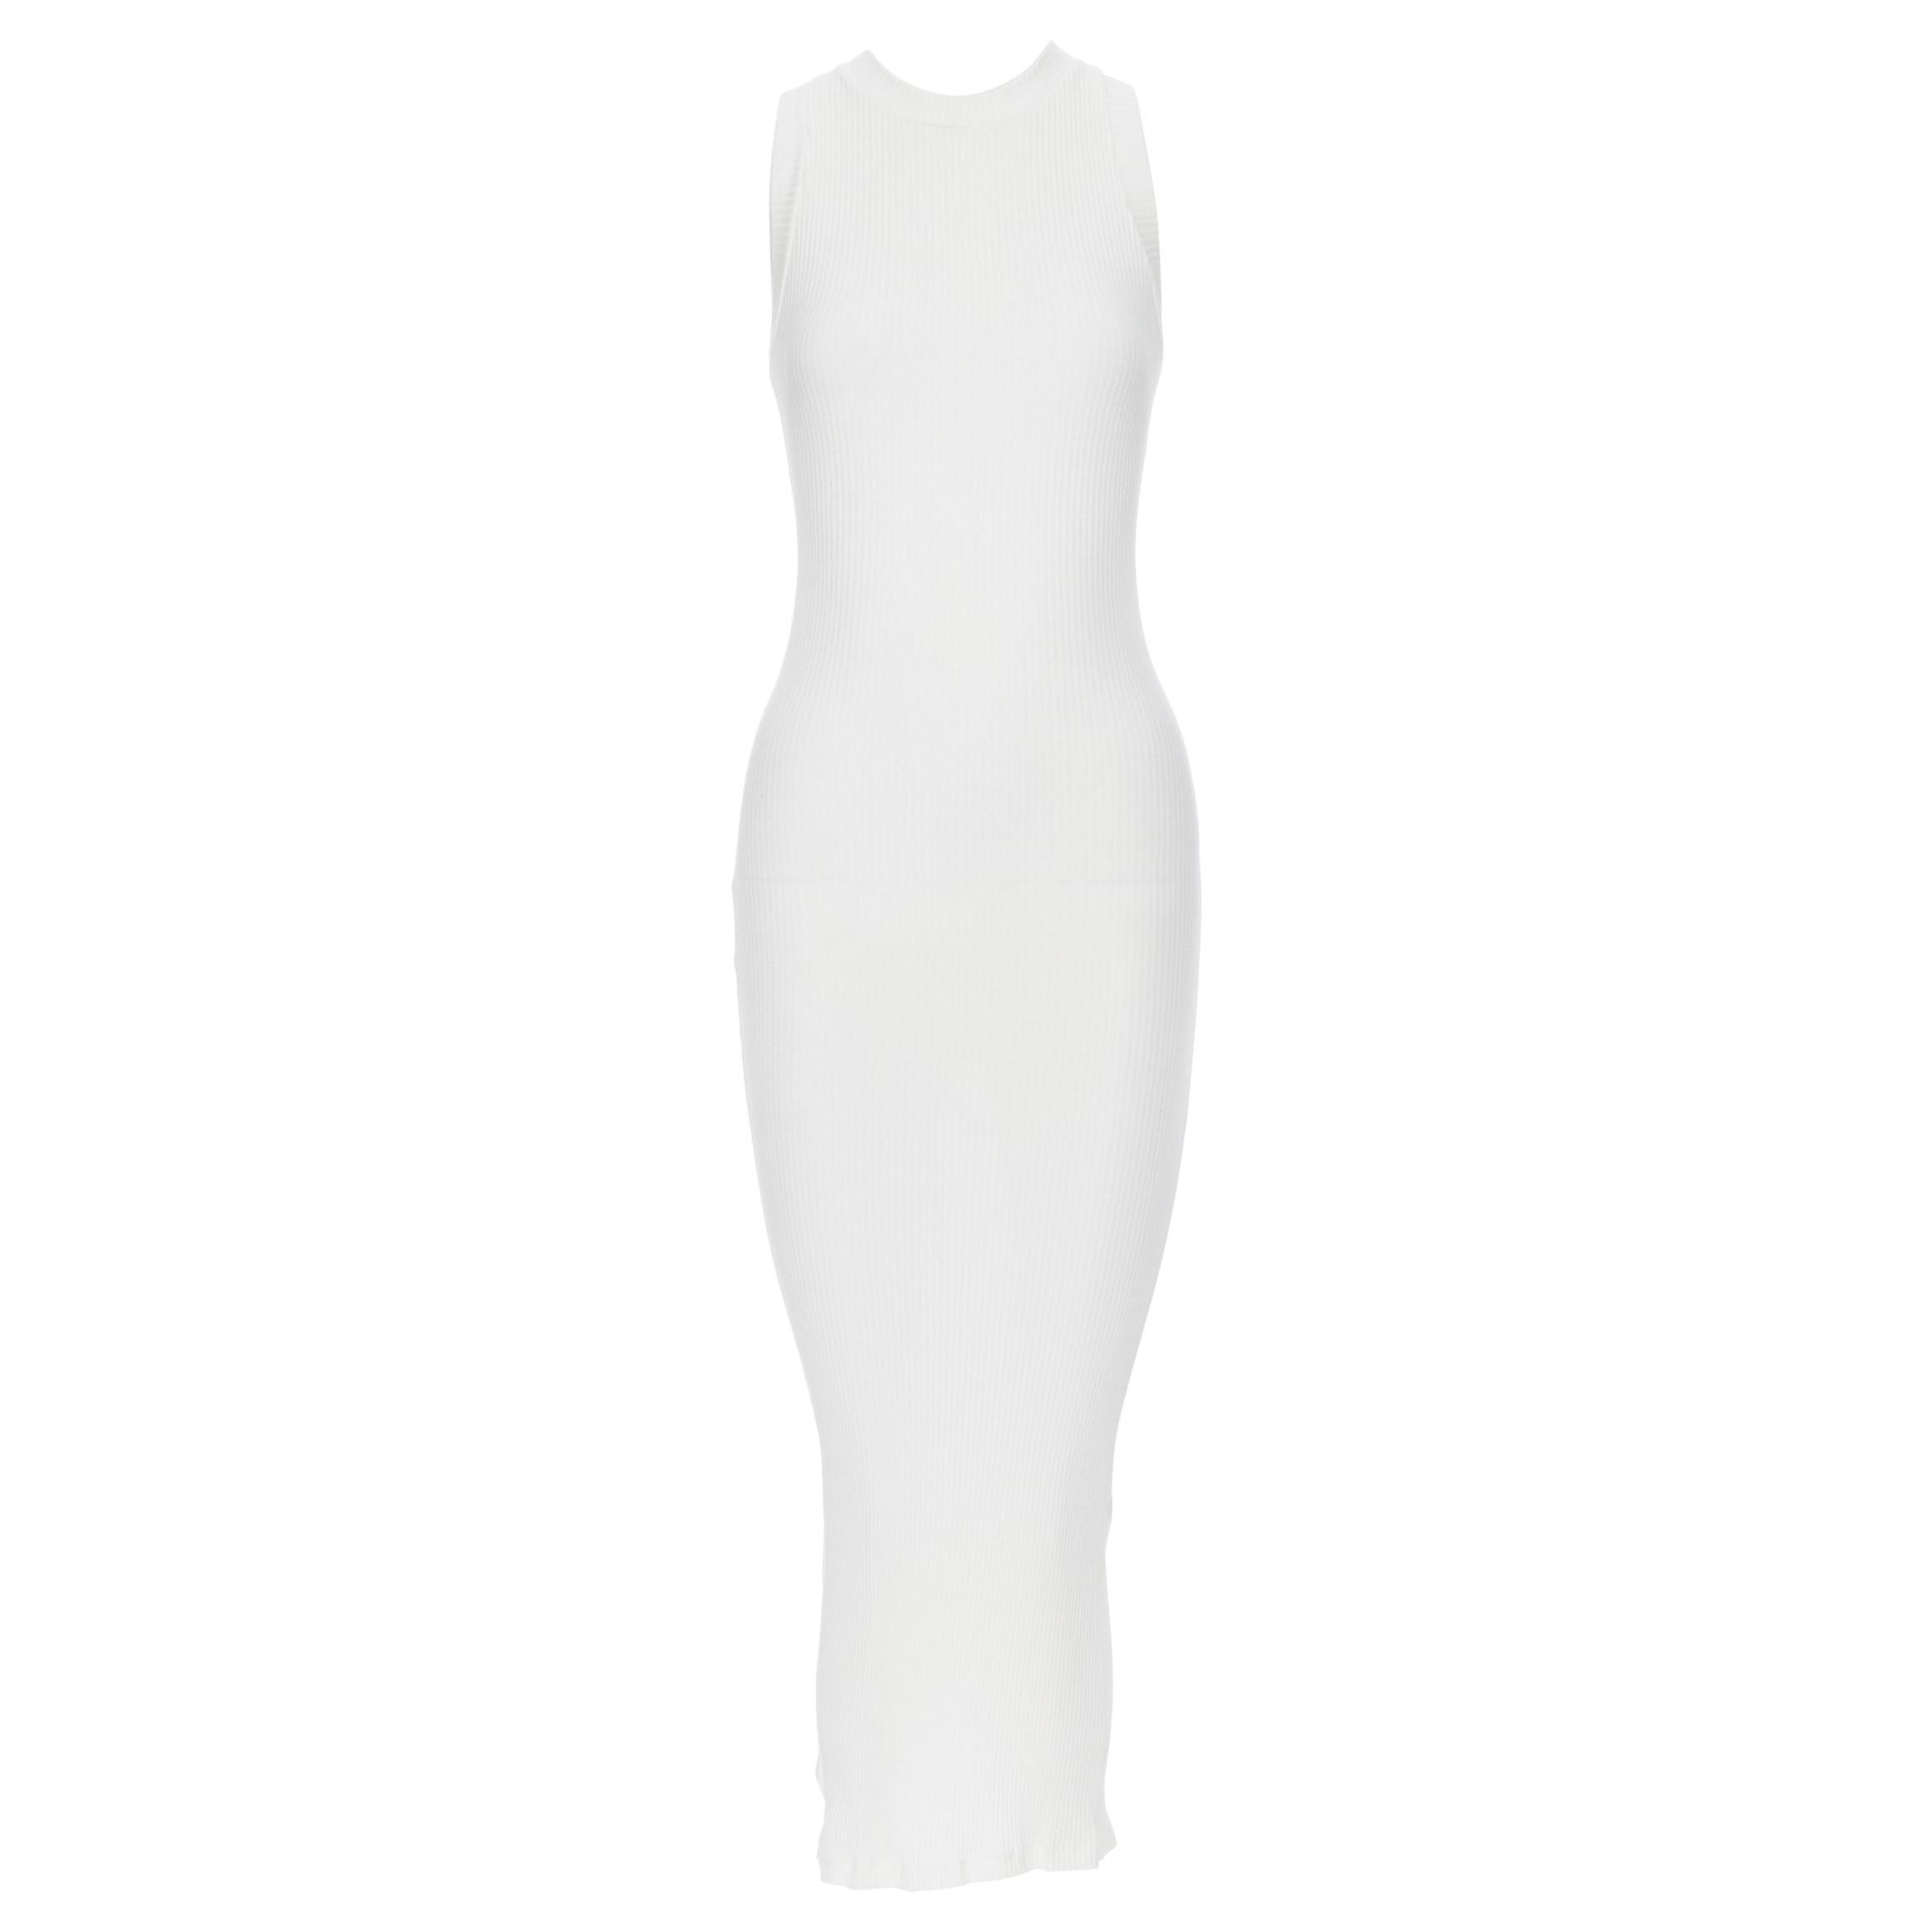 MR LARKIN ivory white ribbed stretch fit minimalist casual day dress XS